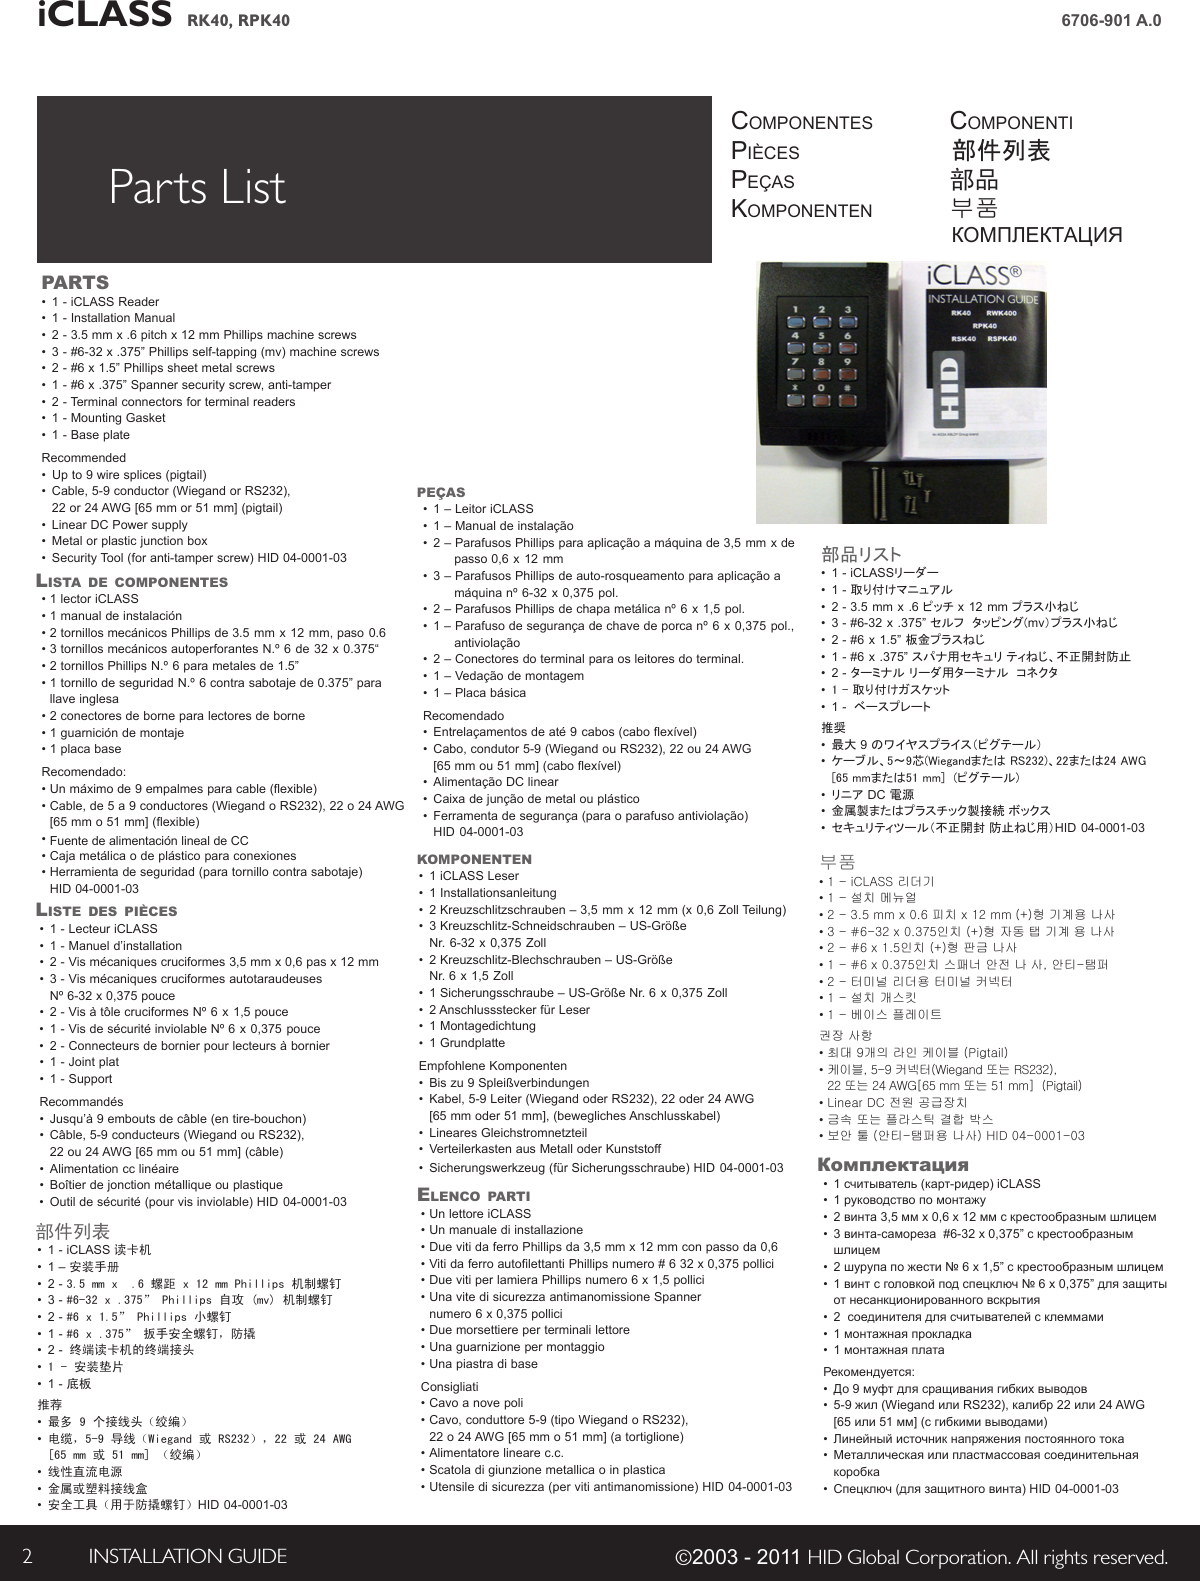 iCLASS RK40, RPK40 INSTALLATION GUIDE2 ©2003 - 2011 HID Global Corporation. All rights reserved.6706-901 A.0Parts List componentespiècespeçasKomponentencomponenti部件列表部品부품КОМПЛЕКТАЦИЯPARTS•  1 - iCLASS Reader •  1 - Installation Manual•  2 - 3.5 mm x .6 pitch x 12 mm Phillips machine screws•  3 - #6-32 x .375” Phillips self-tapping (mv) machine screws •  2 - #6 x 1.5” Phillips sheet metal screws •  1 - #6 x .375” Spanner security screw, anti-tamper •  2 - Terminal connectors for terminal readers•  1 - Mounting Gasket•  1 - Base plateRecommended•  Up to 9 wire splices (pigtail)•  Cable, 5-9 conductor (Wiegand or RS232),  22 or 24 AWG [65 mm or 51 mm] (pigtail) •  Linear DC Power supply•  Metal or plastic junction box •  Security Tool (for anti-tamper screw) HID 04-0001-03LiSTA de comPonenTeS• 1 lector iCLASS • 1 manual de instalación• 2 tornillos mecánicos Phillips de 3.5 mm x 12 mm, paso 0.6•3 tornillos mecánicos autoperforantes N.º 6 de 32 x 0.375“•2 tornillos Phillips N.º 6 para metales de 1.5”•1 tornillo de seguridad N.º 6 contra sabotaje de 0.375” para llave inglesa•2 conectores de borne para lectores de borne• 1 guarnición de montaje• 1 placa baseRecomendado:•Un máximo de 9 empalmes para cable (flexible)• Cable, de 5 a 9 conductores (Wiegand o RS232), 22 o 24 AWG [65 mm o 51 mm] (flexible)• Fuente de alimentación lineal de CC• Caja metálica o de plástico para conexiones• Herramienta de seguridad (para tornillo contra sabotaje)   HID 04-0001-03LiSTe deS PièceS•1 - Lecteur iCLASS•1 - Manuel d’installation•2 - Vis mécaniques cruciformes 3,5 mm x 0,6 pas x 12 mm•3 - Vis mécaniques cruciformes autotaraudeuses Nº 6-32 x 0,375 pouce•2 - Vis à tôle cruciformes Nº 6 x 1,5 pouce•1 - Vis de sécurité inviolable Nº 6 x 0,375 pouce•2 - Connecteurs de bornier pour lecteurs à bornier•  1 - Joint plat•  1 - SupportRecommandés•Jusqu’à 9 embouts de câble (en tire-bouchon)•Câble, 5-9 conducteurs (Wiegand ou RS232), 22 ou 24 AWG [65 mm ou 51 mm] (câble)•Alimentation cc linéaire•Boîtier de jonction métallique ou plastique•Outil de sécurité (pour vis inviolable) HID 04-0001-03PeçAS•1 – Leitor iCLASS•1 – Manual de instalação•2 – Parafusos Phillips para aplicação a máquina de 3,5 mm x de   passo 0,6 x 12 mm•3 – Parafusos Phillips de auto-rosqueamento para aplicação a      máquina nº 6-32 x 0,375 pol. •2 – Parafusos Phillips de chapa metálica nº 6 x 1,5 pol. •1 – Parafuso de segurança de chave de porca nº 6 x 0,375 pol.,        antiviolação •2 – Conectores do terminal para os leitores do terminal. •  1 – Vedação de montagem•  1 – Placa básicaRecomendado•Entrelaçamentos de até 9 cabos (cabo flexível)•Cabo, condutor 5-9 (Wiegand ou RS232), 22 ou 24 AWG [65 mm ou 51 mm] (cabo flexível)•Alimentação DC linear•Caixa de junção de metal ou plástico•Ferramenta de segurança (para o parafuso antiviolação) HID 04-0001-03komPonenTen •1 iCLASS Leser•1 Installationsanleitung•2 Kreuzschlitzschrauben – 3,5 mm x 12 mm (x 0,6 Zoll Teilung)•3 Kreuzschlitz-Schneidschrauben – US-Größe    Nr. 6-32 x 0,375 Zoll•2 Kreuzschlitz-Blechschrauben – US-Größe    Nr. 6 x 1,5 Zoll•1 Sicherungsschraube – US-Größe Nr. 6 x 0,375 Zoll•2 Anschlussstecker für Leser•  1 Montagedichtung• 1 GrundplatteEmpfohlene Komponenten•Bis zu 9 Spleißverbindungen •Kabel, 5-9 Leiter (Wiegand oder RS232), 22 oder 24 AWG [65 mm oder 51 mm], (bewegliches Anschlusskabel)•Lineares Gleichstromnetzteil•Verteilerkasten aus Metall oder Kunststoff •Sicherungswerkzeug (für Sicherungsschraube) HID 04-0001-03eLenco PARTi• Un lettore iCLASS• Un manuale di installazione• Due viti da ferro Phillips da 3,5 mm x 12 mm con passo da 0,6• Viti da ferro autofilettanti Phillips numero # 6 32 x 0,375 pollici• Due viti per lamiera Phillips numero 6 x 1,5 pollici• Una vite di sicurezza antimanomissione Spanner numero 6 x 0,375 pollici• Due morsettiere per terminali lettore• Una guarnizione per montaggio• Una piastra di baseConsigliati• Cavo a nove poli• Cavo, conduttore 5-9 (tipo Wiegand o RS232), 22 o 24 AWG [65 mm o 51 mm] (a tortiglione)• Alimentatore lineare c.c.• Scatola di giunzione metallica o in plastica• Utensile di sicurezza (per viti antimanomissione) HID 04-0001-03部件列表•  1 - iCLASS 读卡机•  1 – 安装手册•  2 - 3.5mmx.6螺距x12mmPhillips机制螺钉•  3 - #6-32x.375”Phillips自攻(mv)机制螺钉•  2 - #6x1.5”Phillips小螺钉•  1 - #6x.375”扳手安全螺钉，防撬•  2 -终端读卡机的终端接头•  1-安装垫片•  1 - 底板推荐• 最多9个接线头（绞编）•  电缆，5-9导线（Wiegand或RS232），22或24AWG[65mm或51mm]（绞编）•  线性直流电源• 金属或塑料接线盒• 安全工具（用于防撬螺钉）HID 04-0001-03部品リスト•  1 - iCLASSリーダー•  1 - 取り付けマニュアル•  2 - 3.5 mm x .6 ピッチ x 12 mm プラス小ねじ•  3 - #6-32 x .375” セルフ  タッピング(mv）プラス小ねじ•  2 - #6 x 1.5” 板金プラスねじ•  1 - #6 x .375” スパナ用セキュリ ティねじ、不正開封防止•  2 - ターミナル リーダ用ターミナル  コネクタ• 1 - 取り付けガスケット•  1 -  ベースプレート推奨• 最大 9 のワイヤスプライス（ピグテール）• ケーブル、5～9芯(Wiegandまたは RS232)、22または24 AWG [65 mmまたは51 mm]  (ピグテール)• リニア DC 電源• 金属製またはプラスチック製接続 ボックス• セキュリティツール（不正開封 防止ねじ用）HID 04-0001-03부품• 1 - iCLASS 리더기• 1 - 설치 메뉴얼• 2 - 3.5 mm x 0.6 피치 x 12 mm (+)형 기계용 나사• 3 - #6-32 x 0.375인치 (+)형 자동 탭 기계 용 나사 • 2 - #6 x 1.5인치 (+)형 판금 나사• 1 - #6 x 0.375인치 스패너 안전 나 사, 안티-탬퍼 • 2 - 터미널 리더용 터미널 커넥터• 1 - 설치 개스킷• 1 - 베이스 플레이트권장 사항• 최대 9개의 라인 케이블 (Pigtail)• 케이블, 5-9 커넥터(Wiegand 또는 RS232), 22 또는 24 AWG[65 mm 또는 51 mm]  (Pigtail)• Linear DC 전원 공급장치• 금속 또는 플라스틱 결합 박스• 보안 툴 (안티-탬퍼용 나사) HID 04-0001-03Комплектация•  1 считыватель (карт-ридер) iCLASS•  1 руководство по монтажу•  2 винта 3,5 мм x 0,6 x 12 мм с крестообразным шлицем•  3 винта-самореза  #6-32 x 0,375” с крестообразным шлицем•  2 шурупа по жести № 6 x 1,5” с крестообразным шлицем•  1 винт с головкой под спецключ № 6 x 0,375” для защиты от несанкционированного вскрытия•  2  соединителя для считывателей с клеммами•  1 монтажная прокладка•  1 монтажная платаРекомендуется:•  До 9 муфт для сращивания гибких выводов•  5-9 жил (Wiegand или RS232), калибр 22 или 24 AWG [65 или 51 мм] (с гибкими выводами)•  Линейный источник напряжения постоянного тока•  Металлическая или пластмассовая соединительная коробка•  Спецключ (для защитного винта) HID 04-0001-03